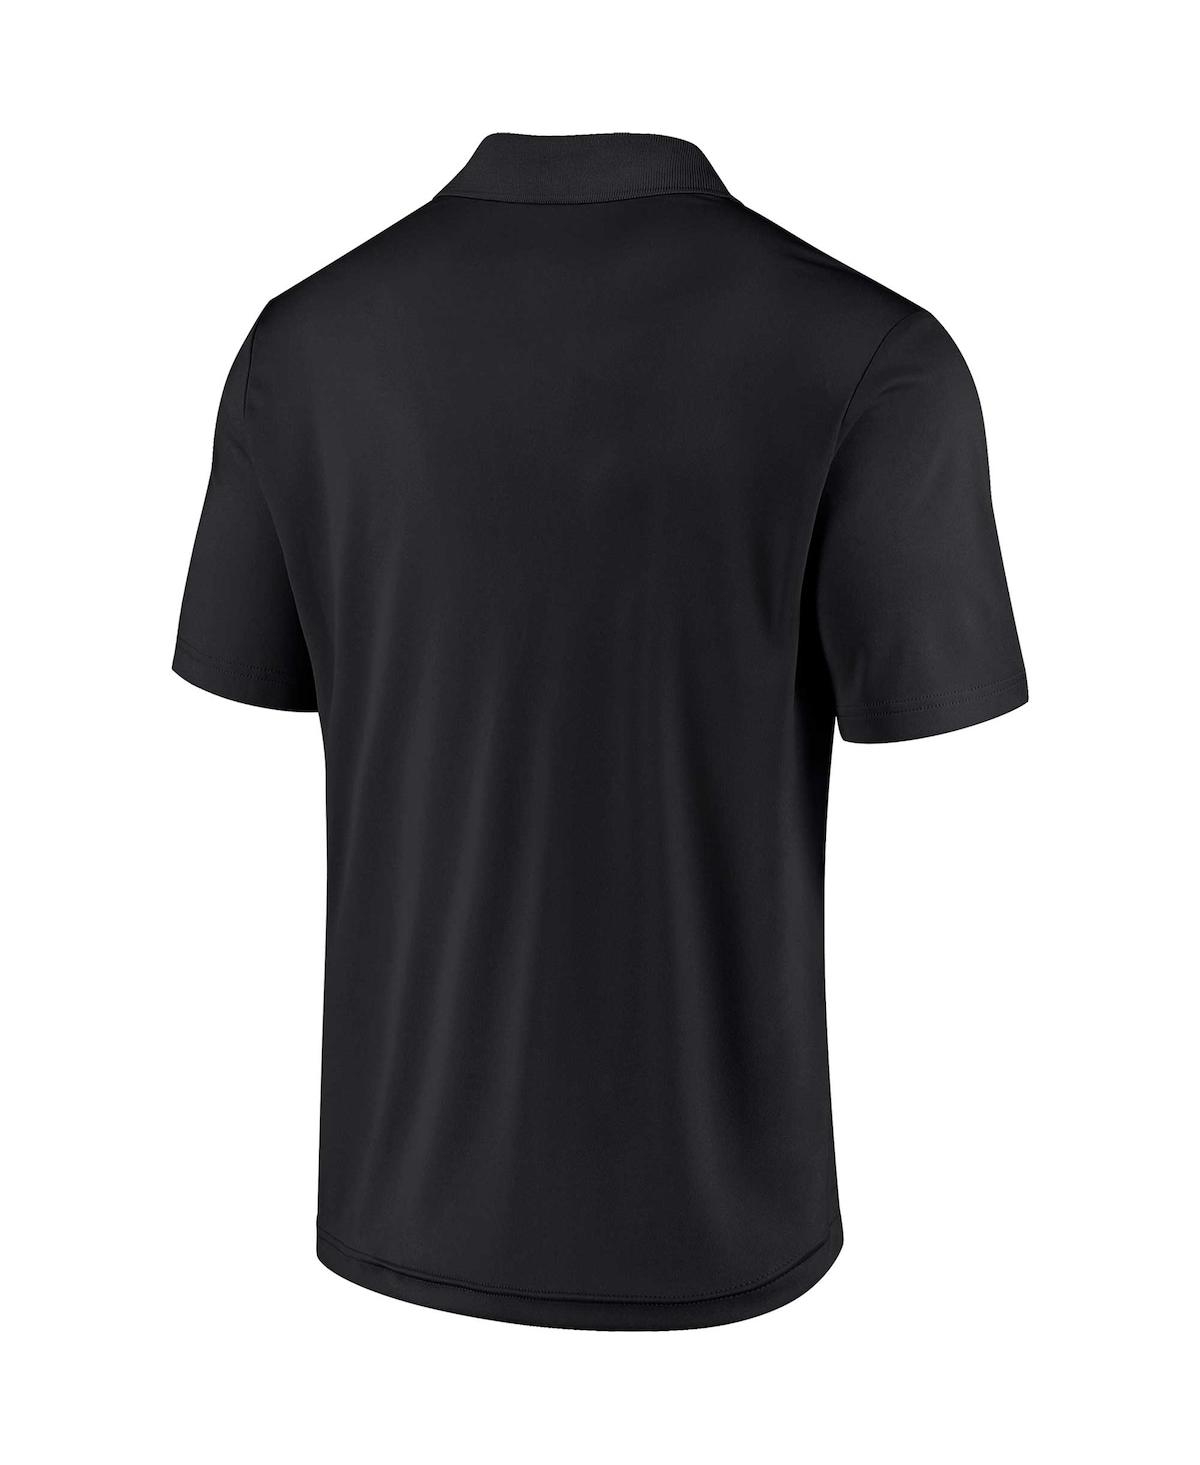 Men's Las Vegas Raiders Fanatics Branded Silver/Black Two-Pack T-Shirt  Combo Set